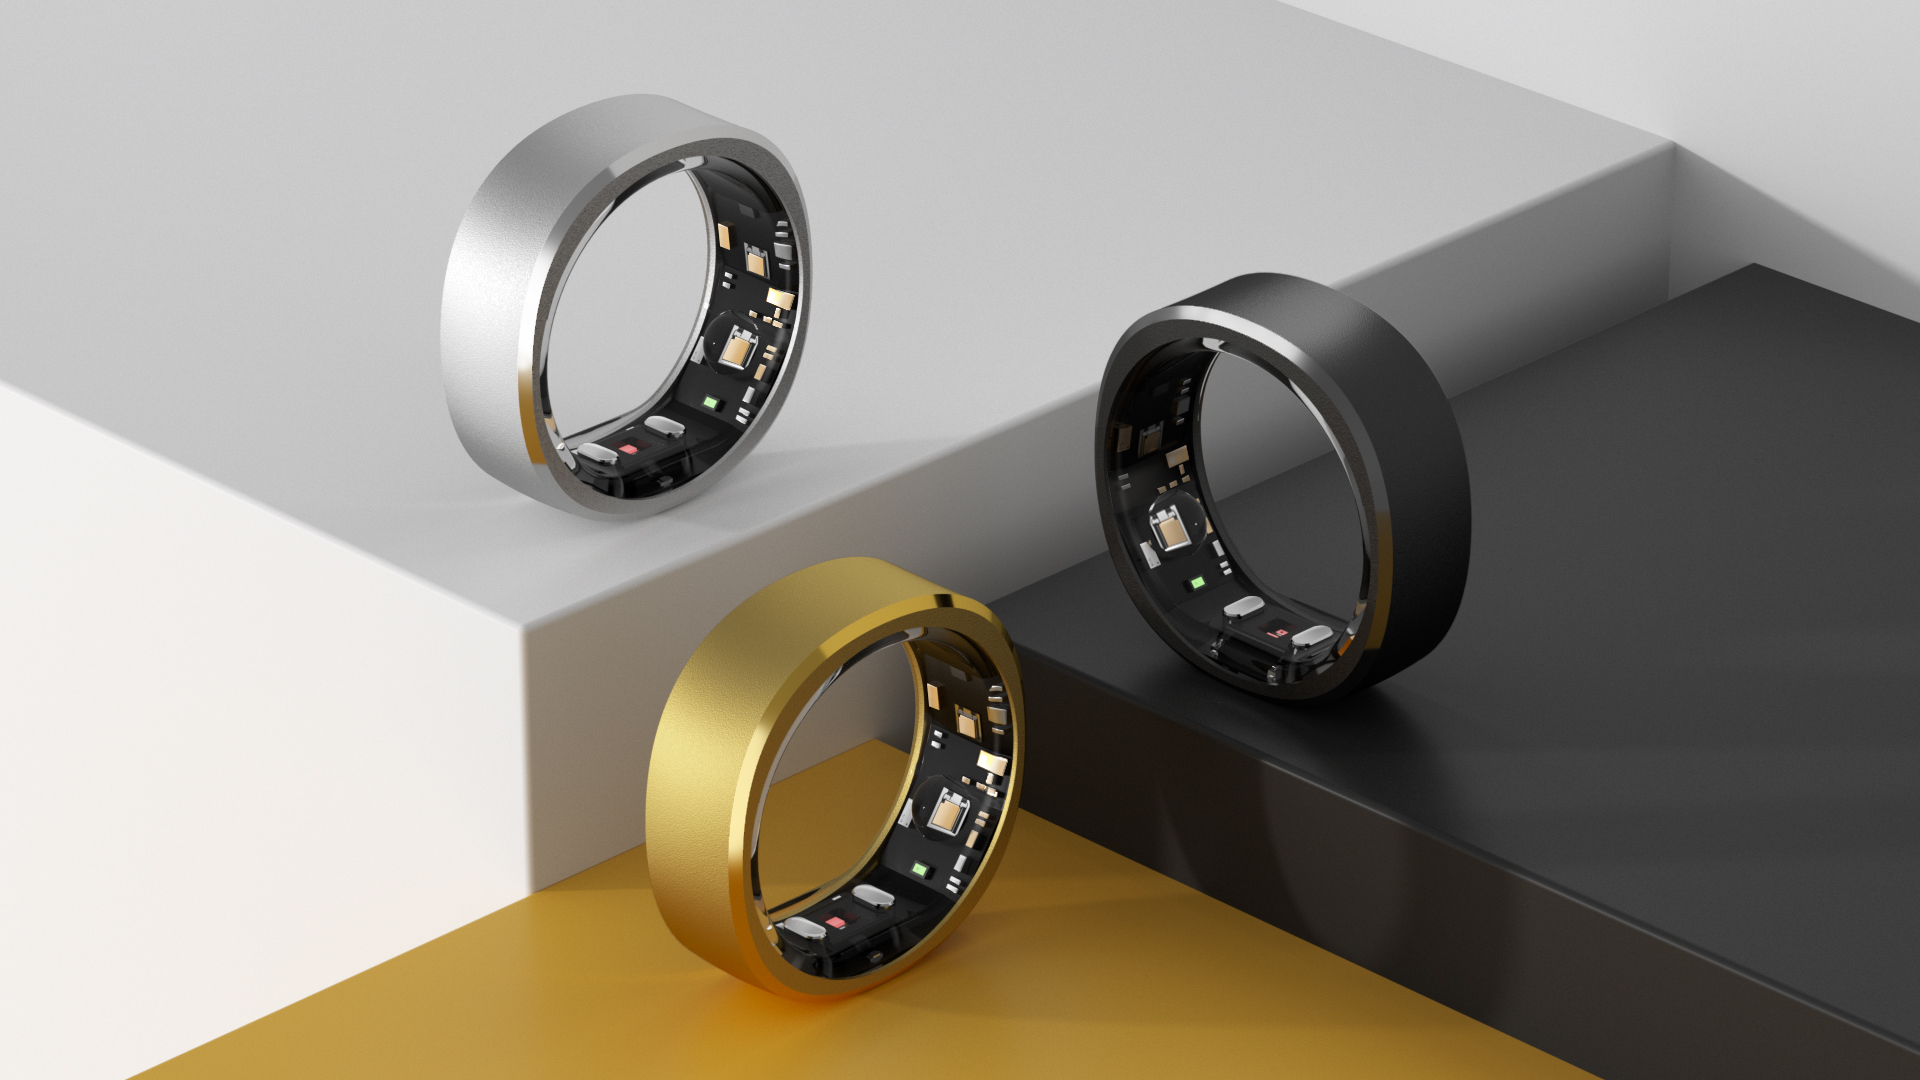 Ringconn Smart Ring